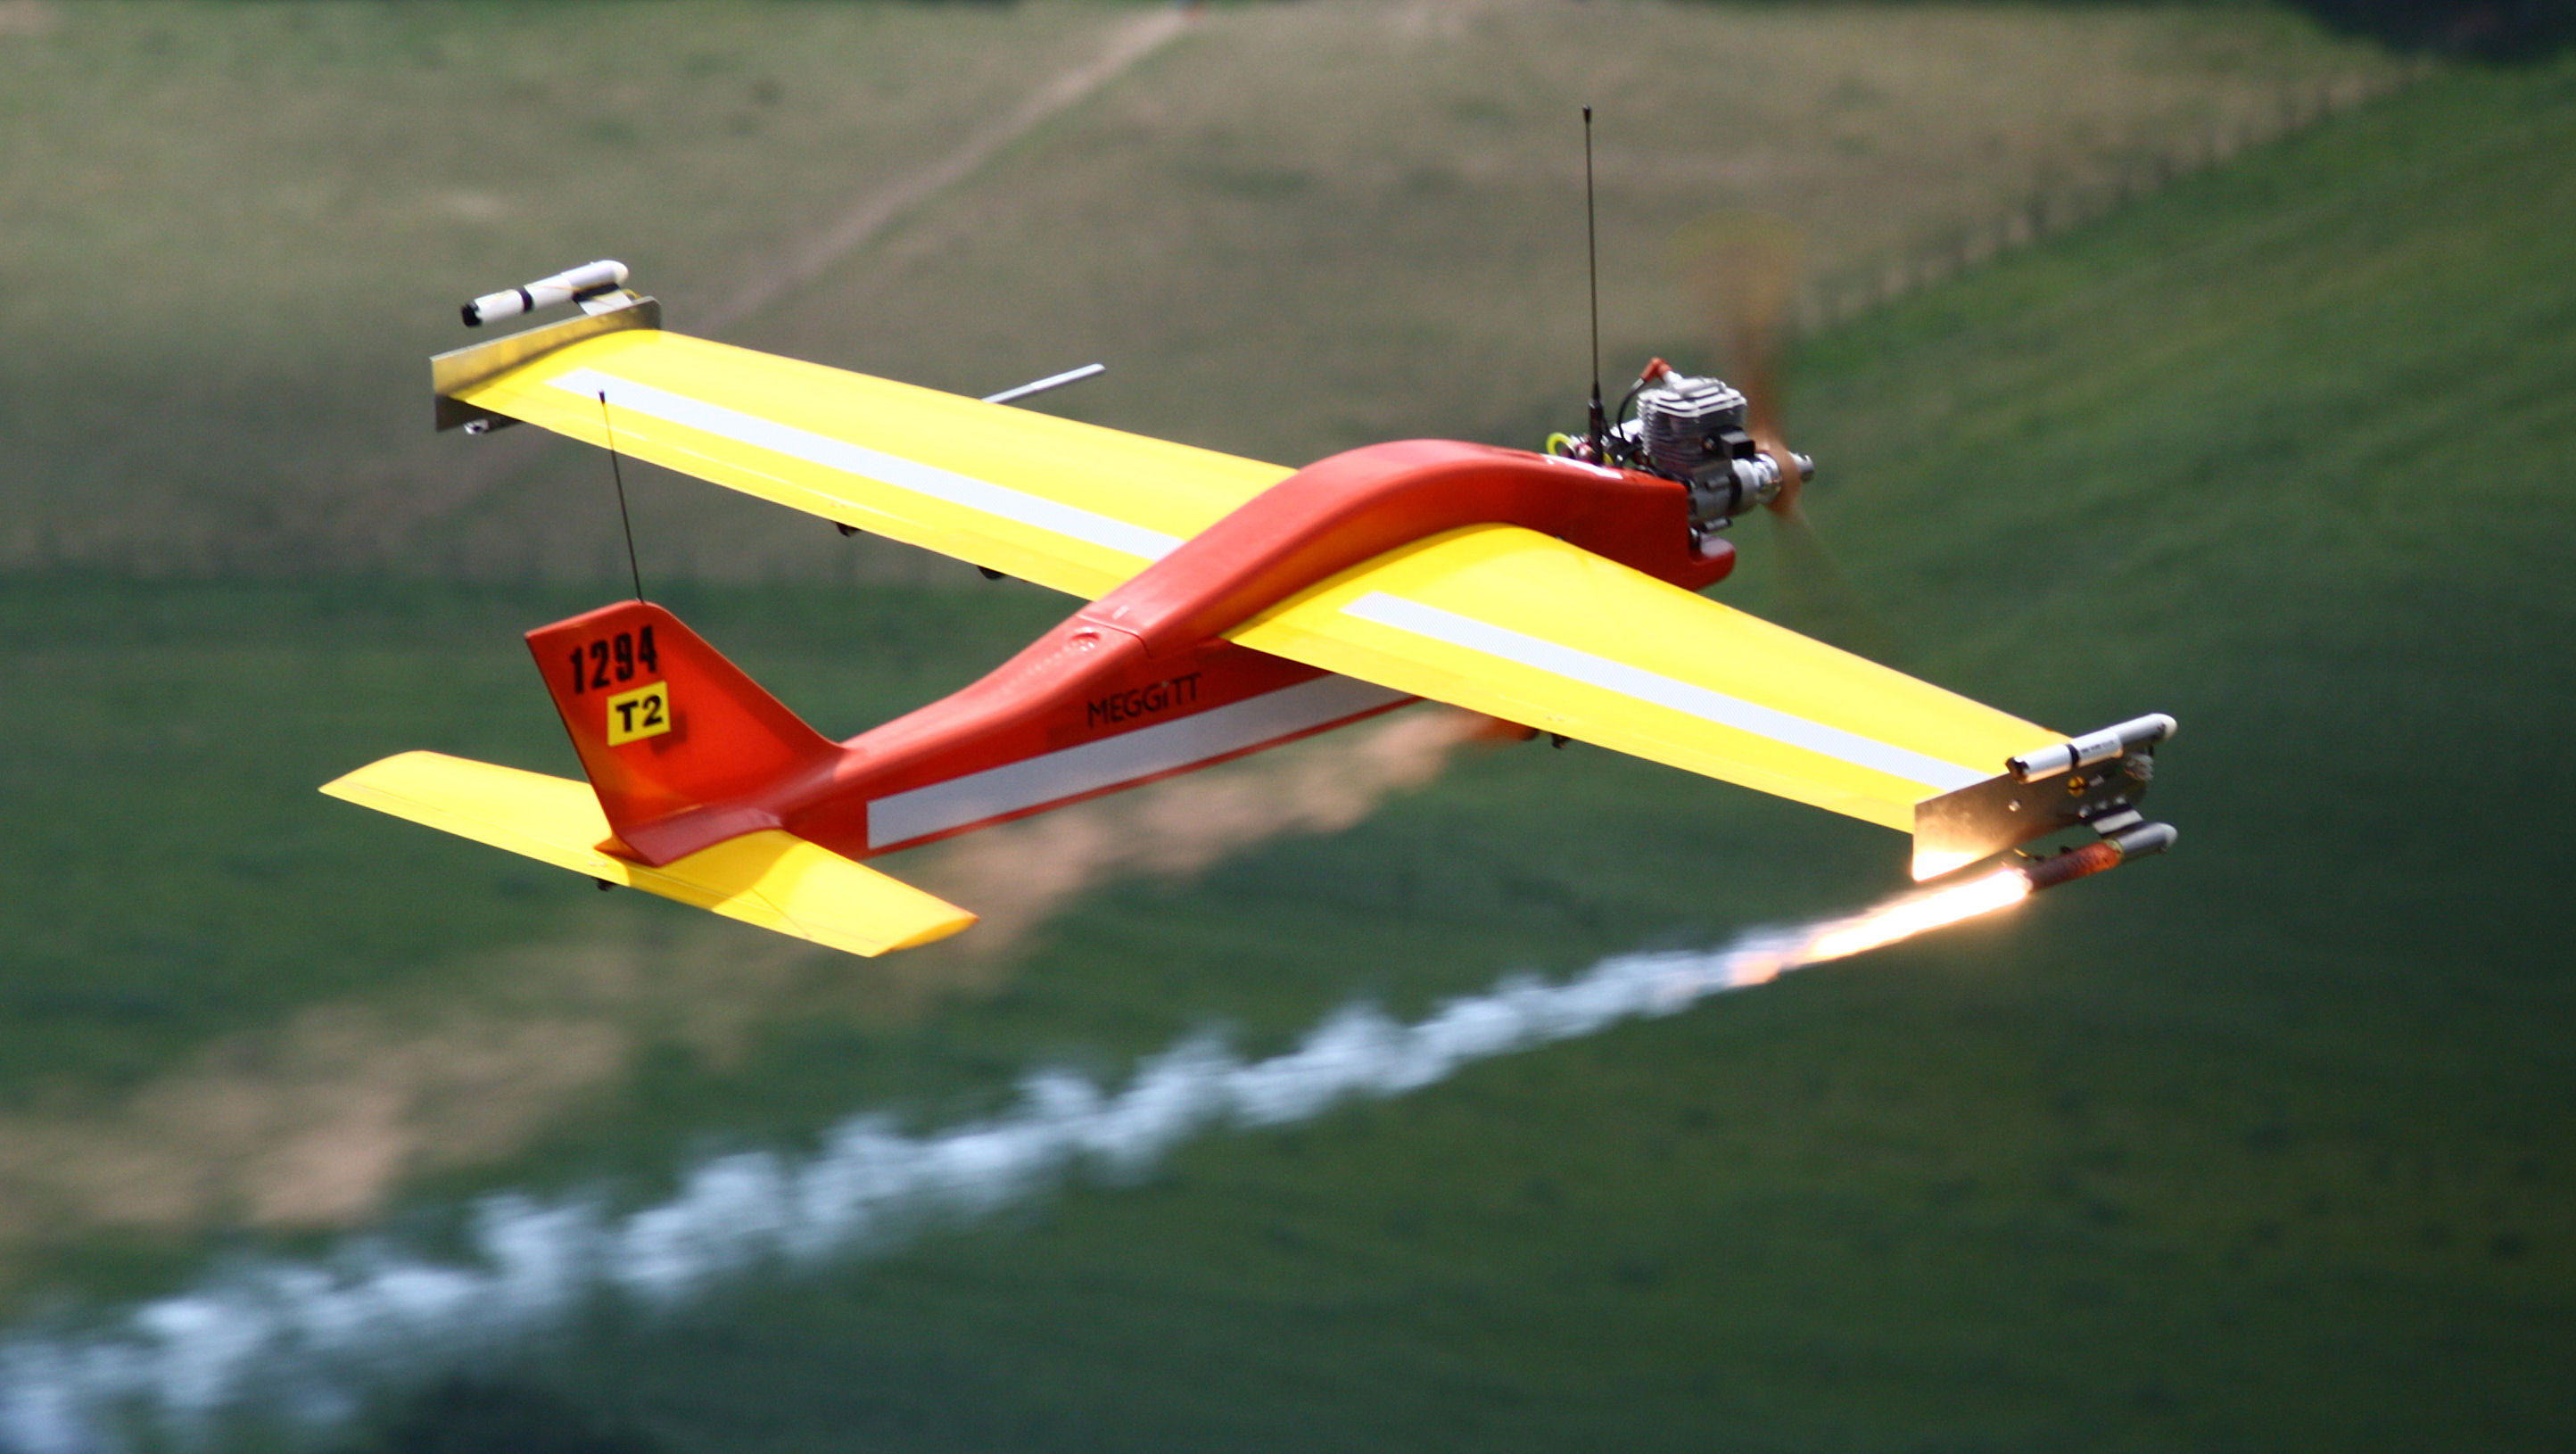 Houbara Flies Transonic At UMEX2020 With Next-Generation Banshee Aerial Target